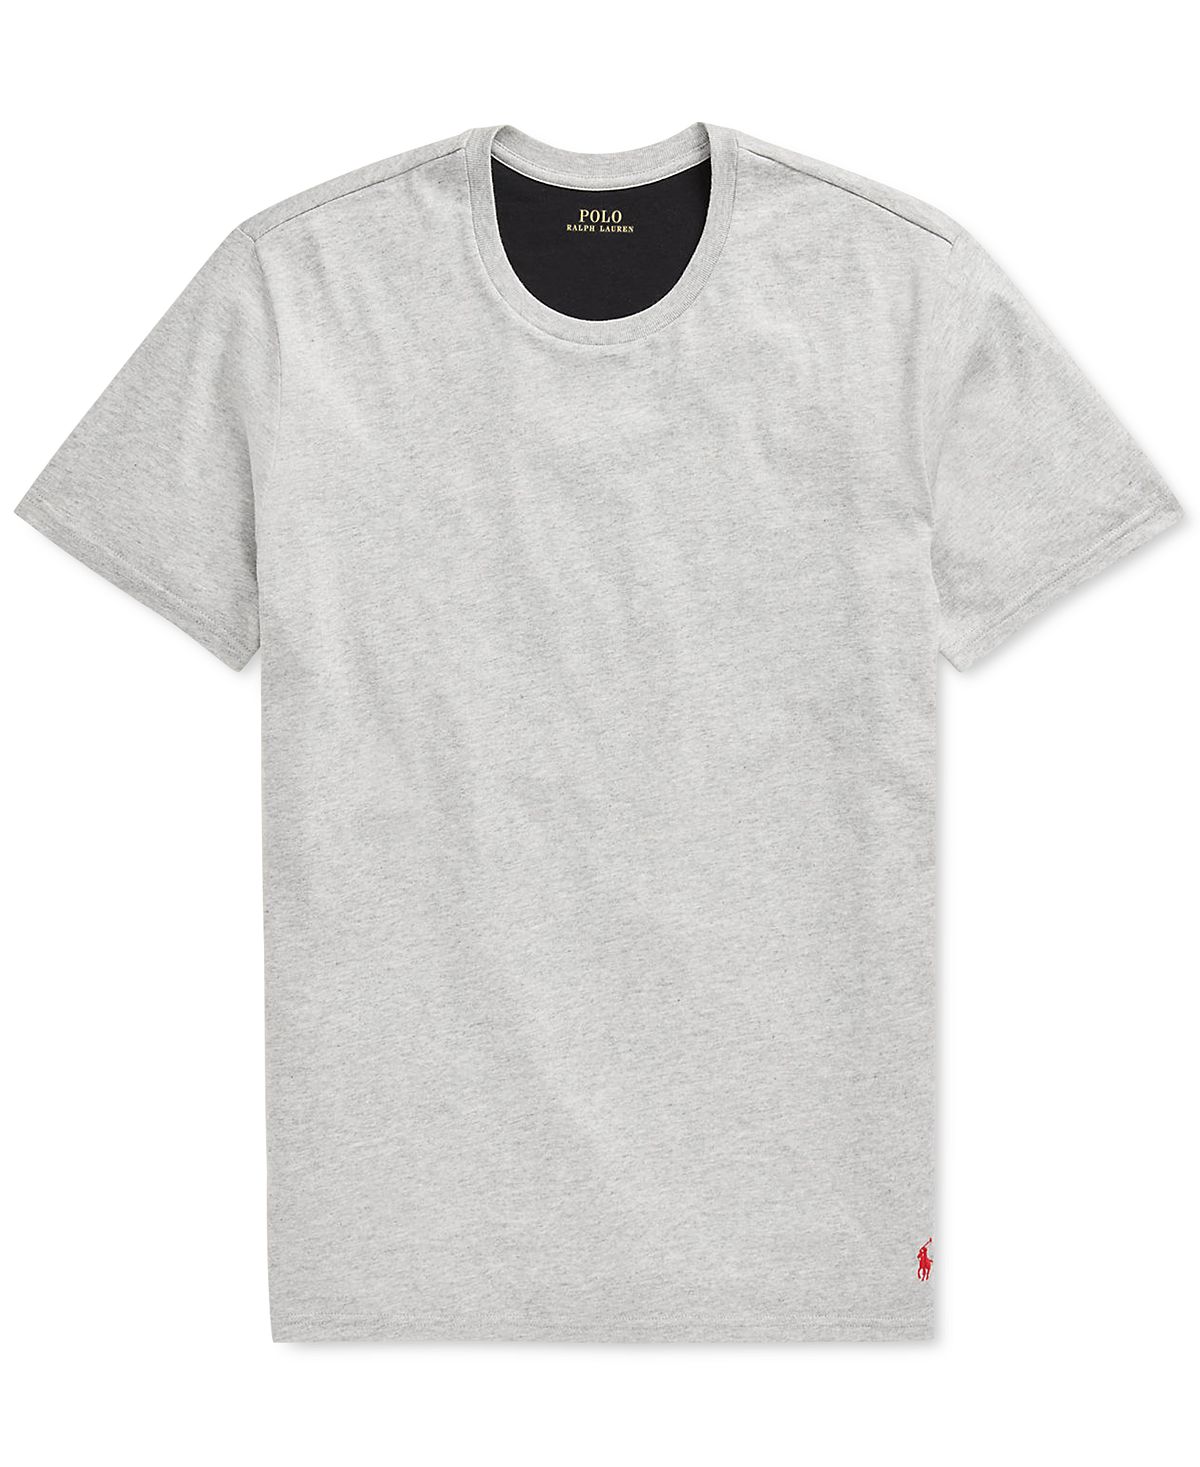 Мужская футболка Supreme Comfort для сна Polo Ralph Lauren